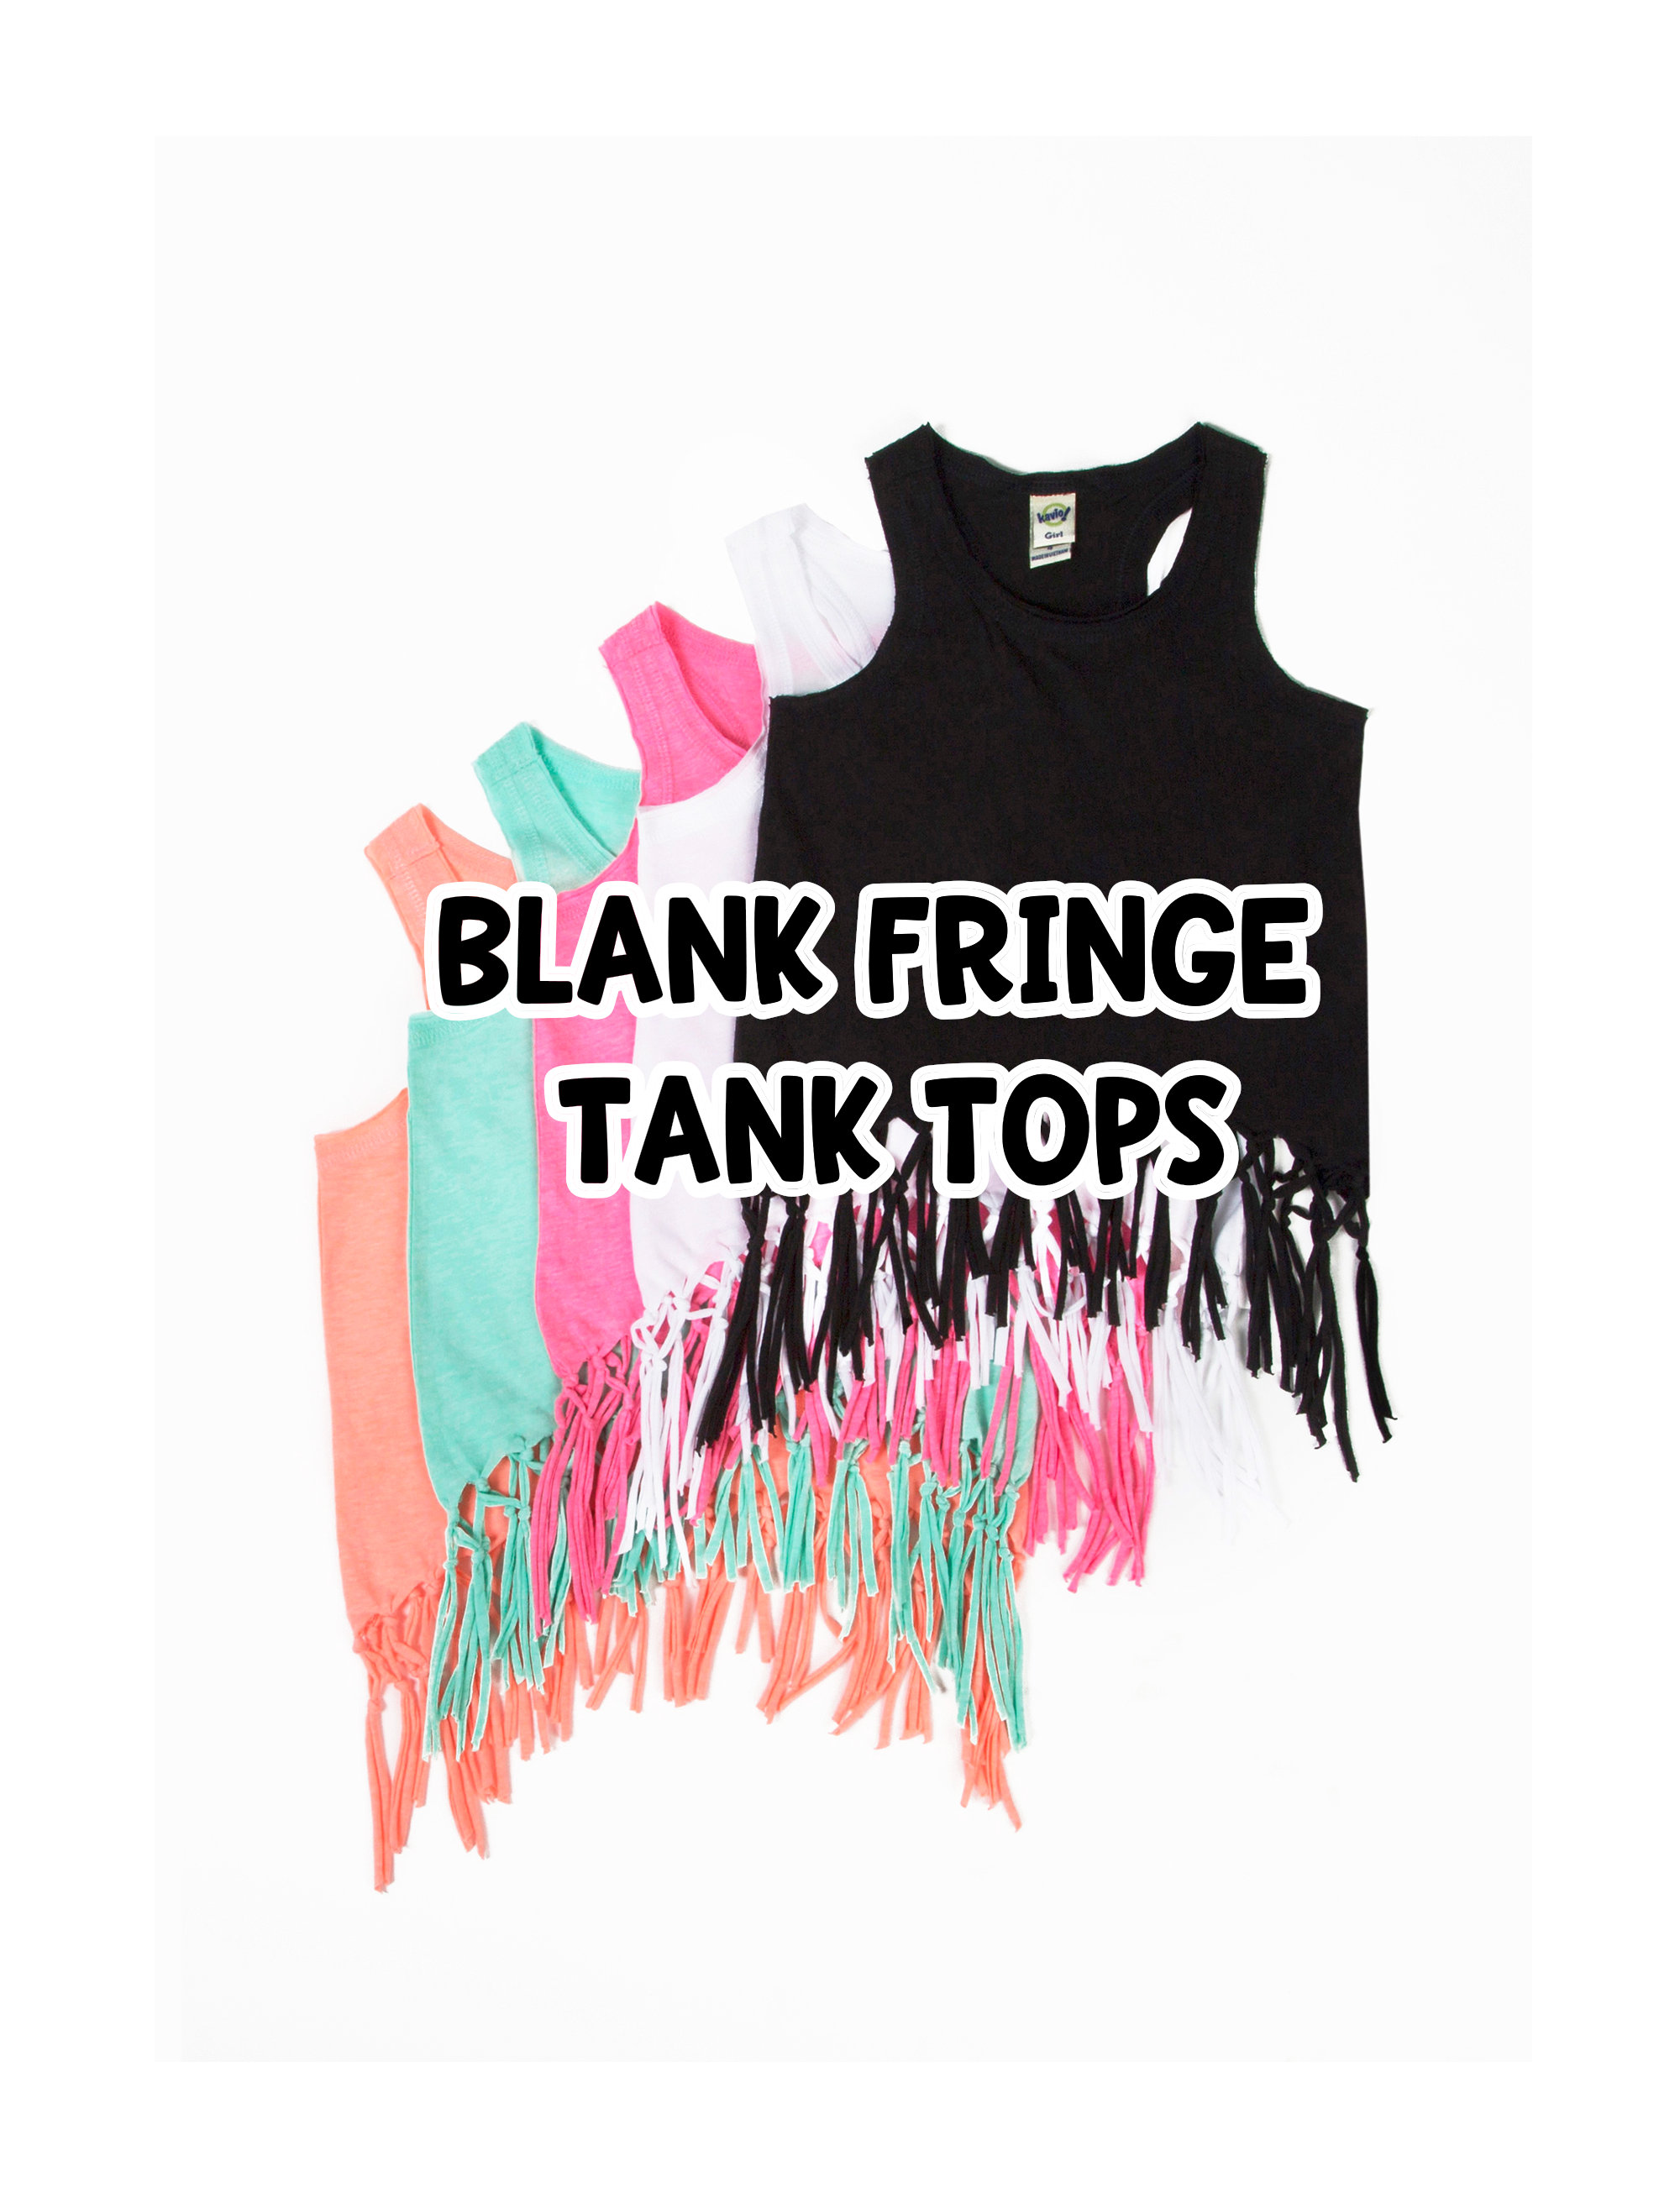 BLANK Girls and Junior Fringe Tank Tops NO DESIGN Blank Fringe